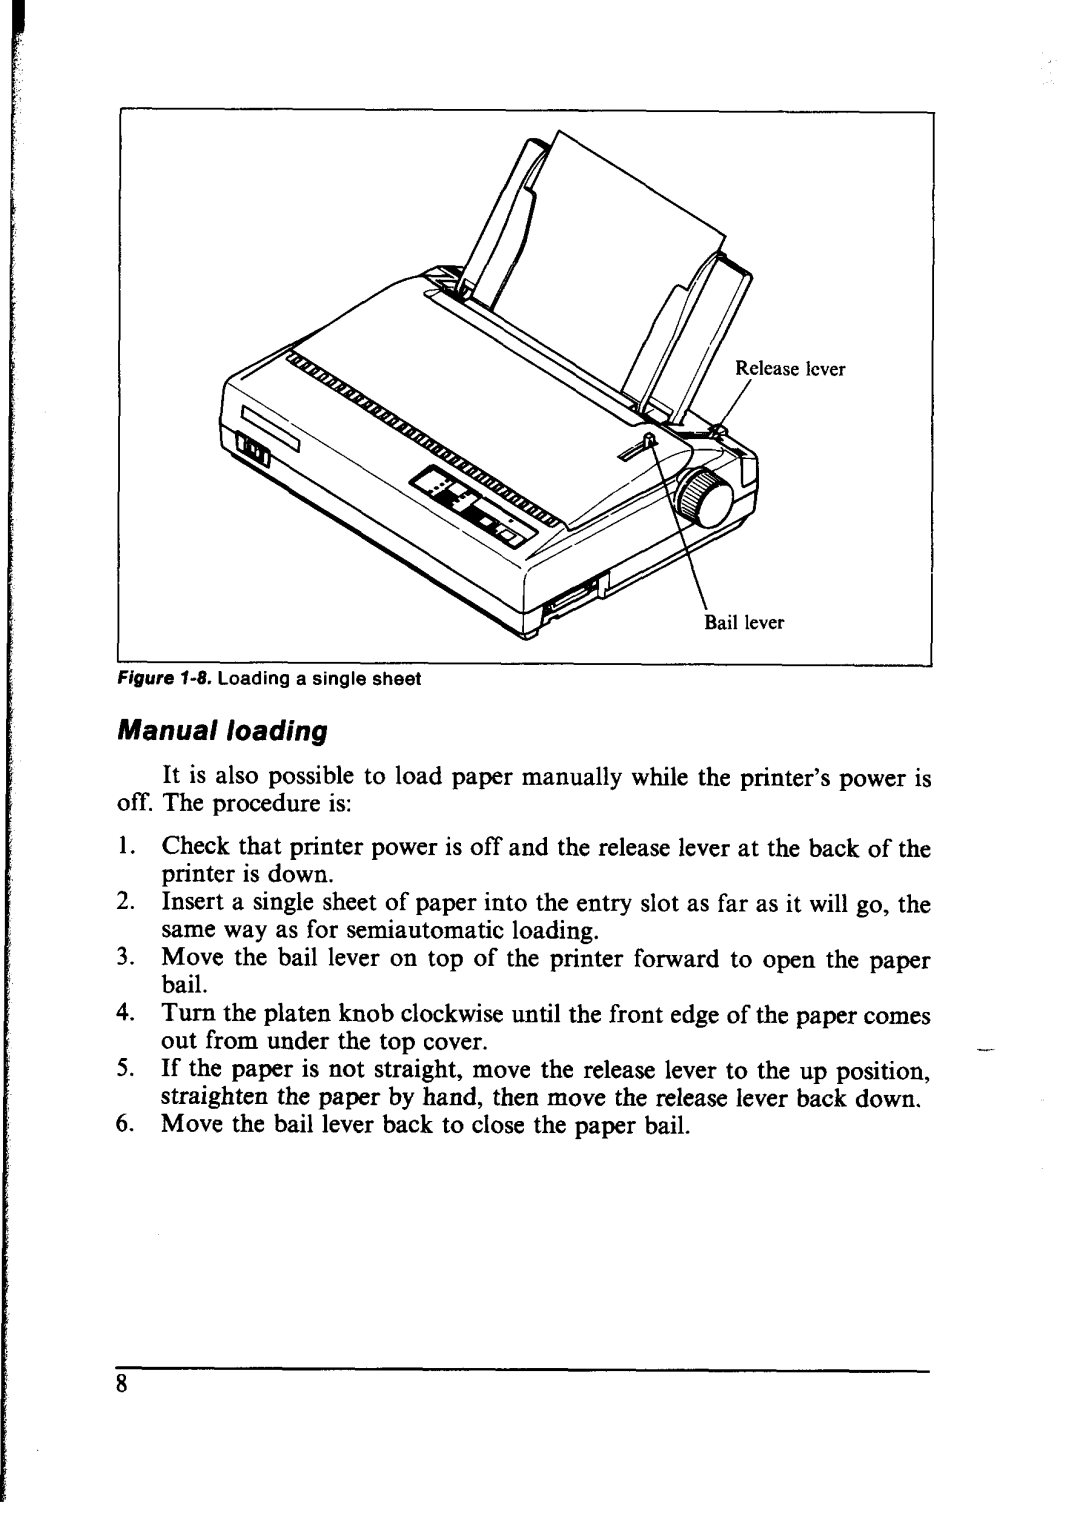 Star Micronics NX-1000 manual Manual loading 